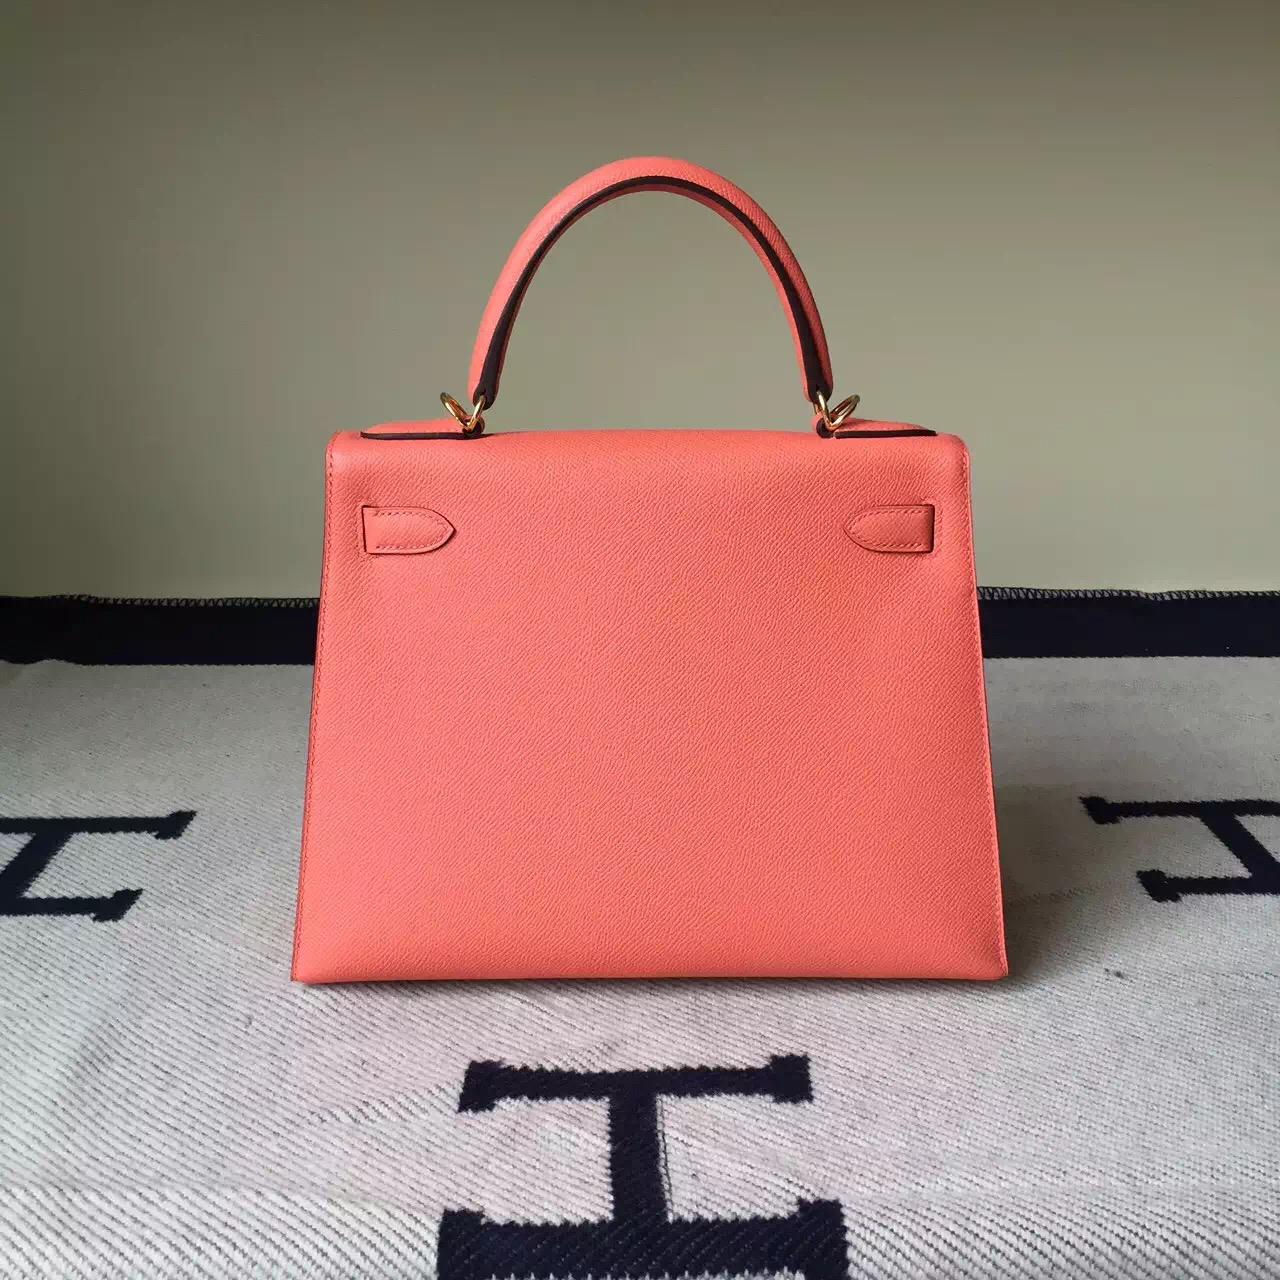 Discount Hermes I5 Flamingo Epsom Leather Sellier Kelly Bag 28cm